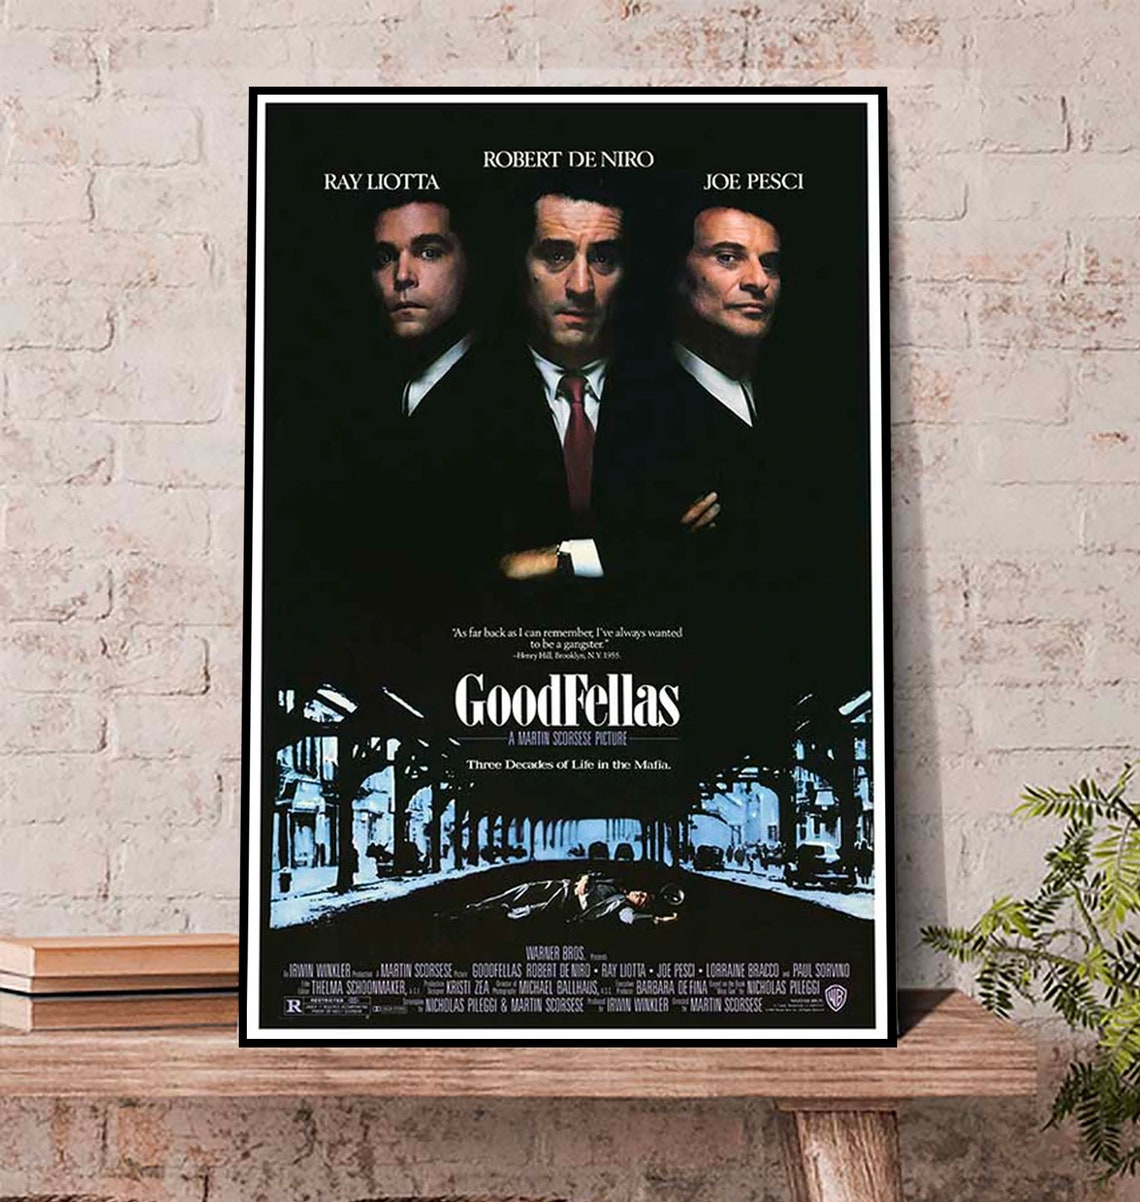 Goodfellas 1990 Movie Poster, Goodfellas Ray Liotta Poster Poster Fan 